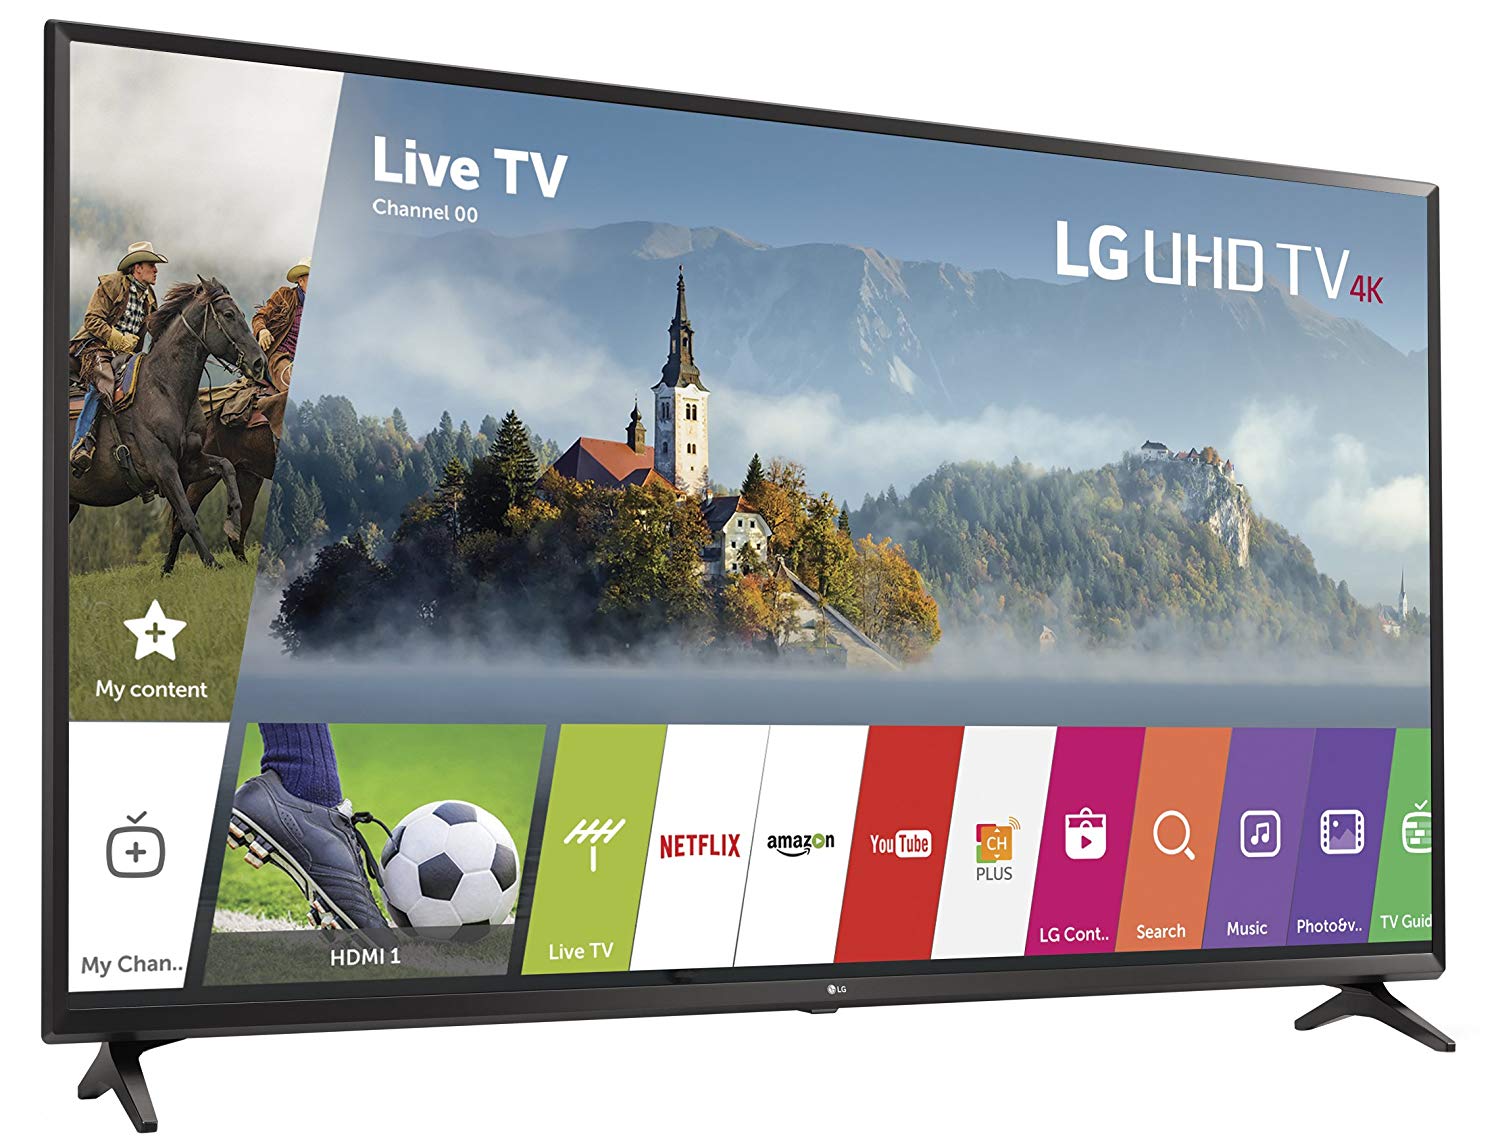 LG إلكترونيات 65UJ6300 65-Inch 4K Ultra HD Smart LED TV (موديل 2017)